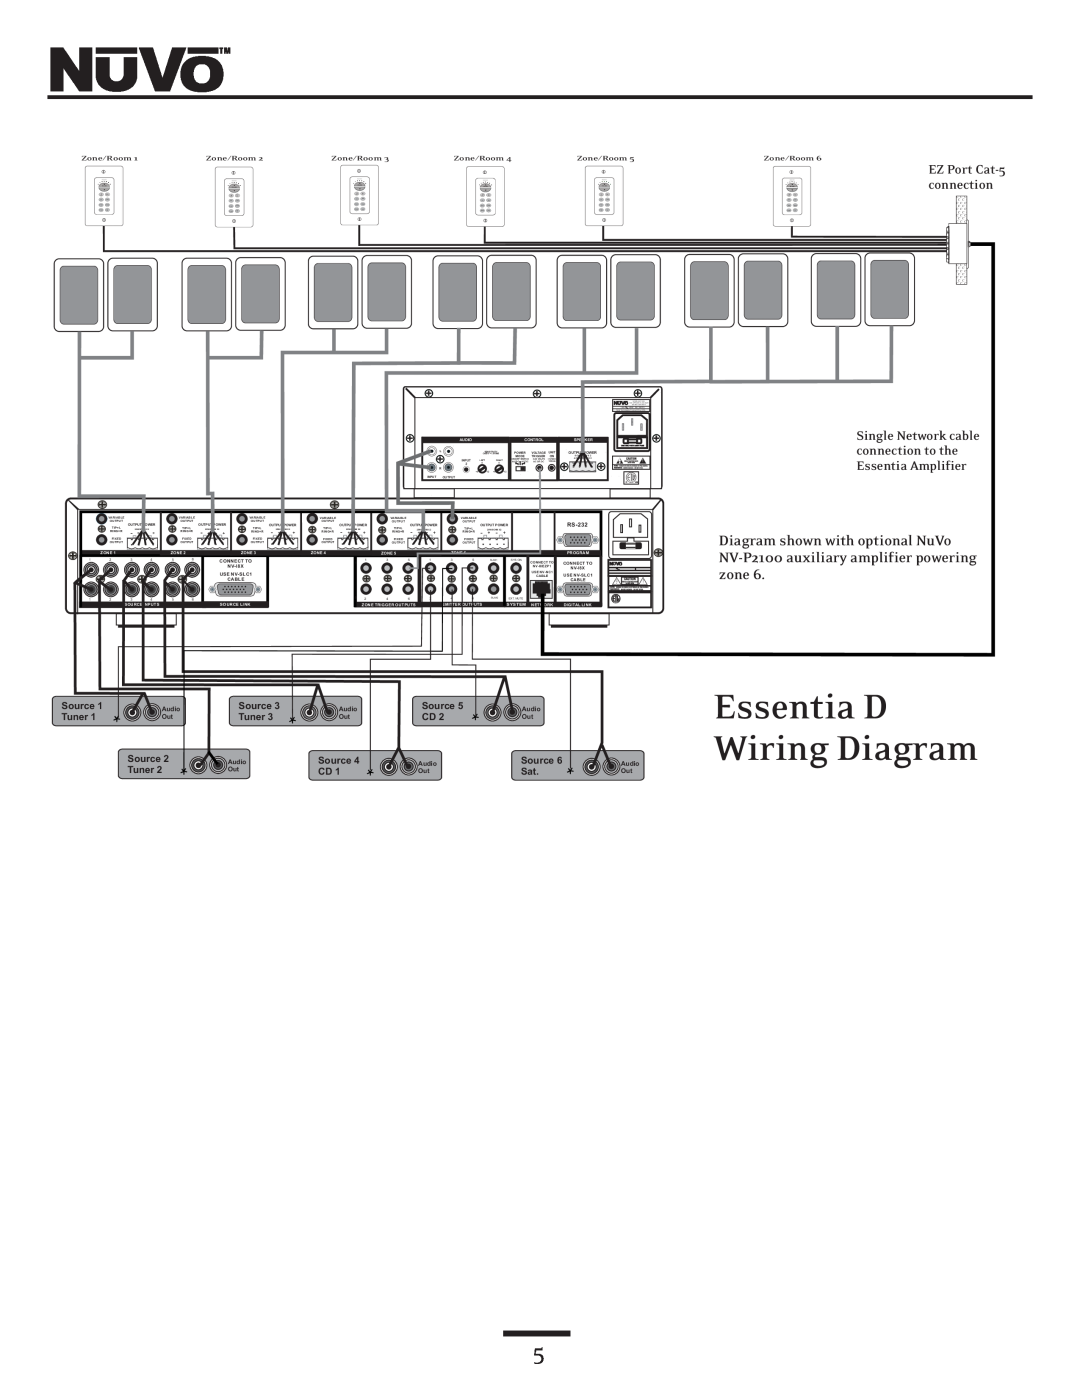 Nuvo NV-E6DMS, NV-E6DXS owner manual Essentia D Wiring Diagram, Source, Tuner 